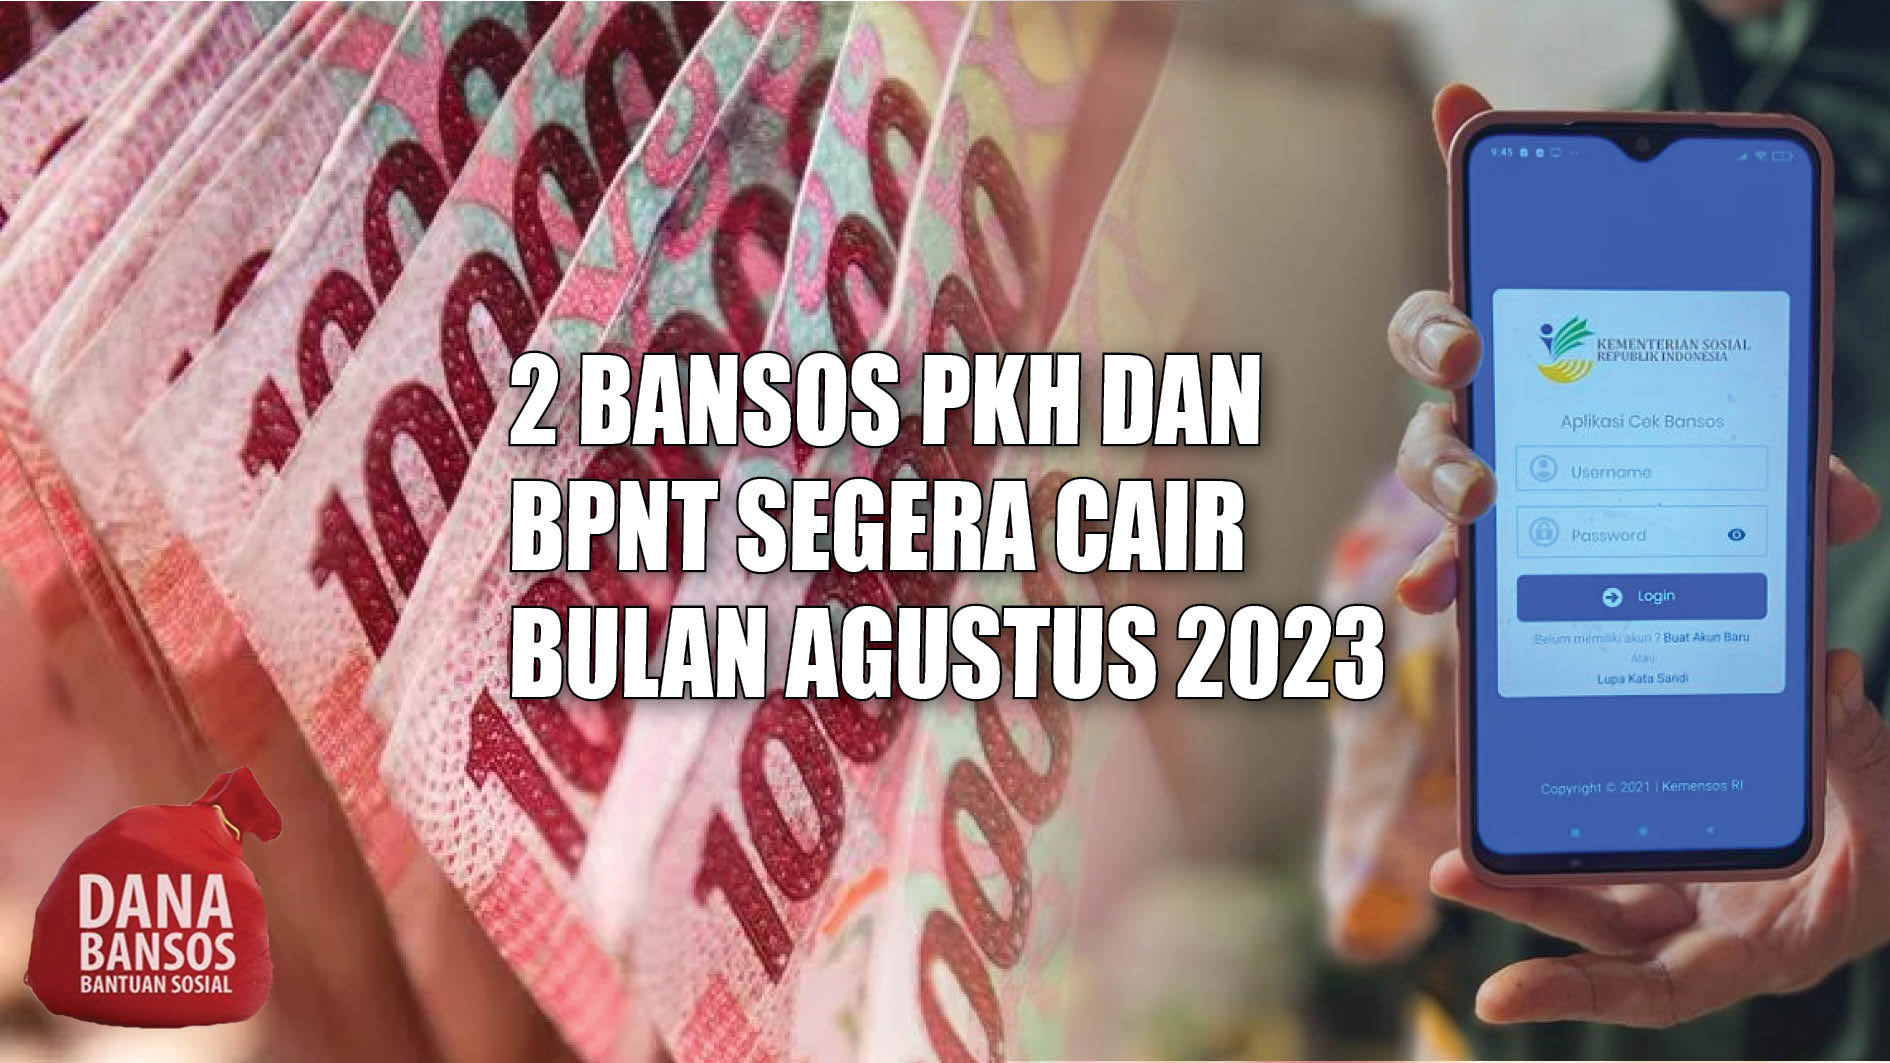 Cek Saldo! 2 Bansos PKH dan BPNT Segera Cair Bulan Agustus 2023